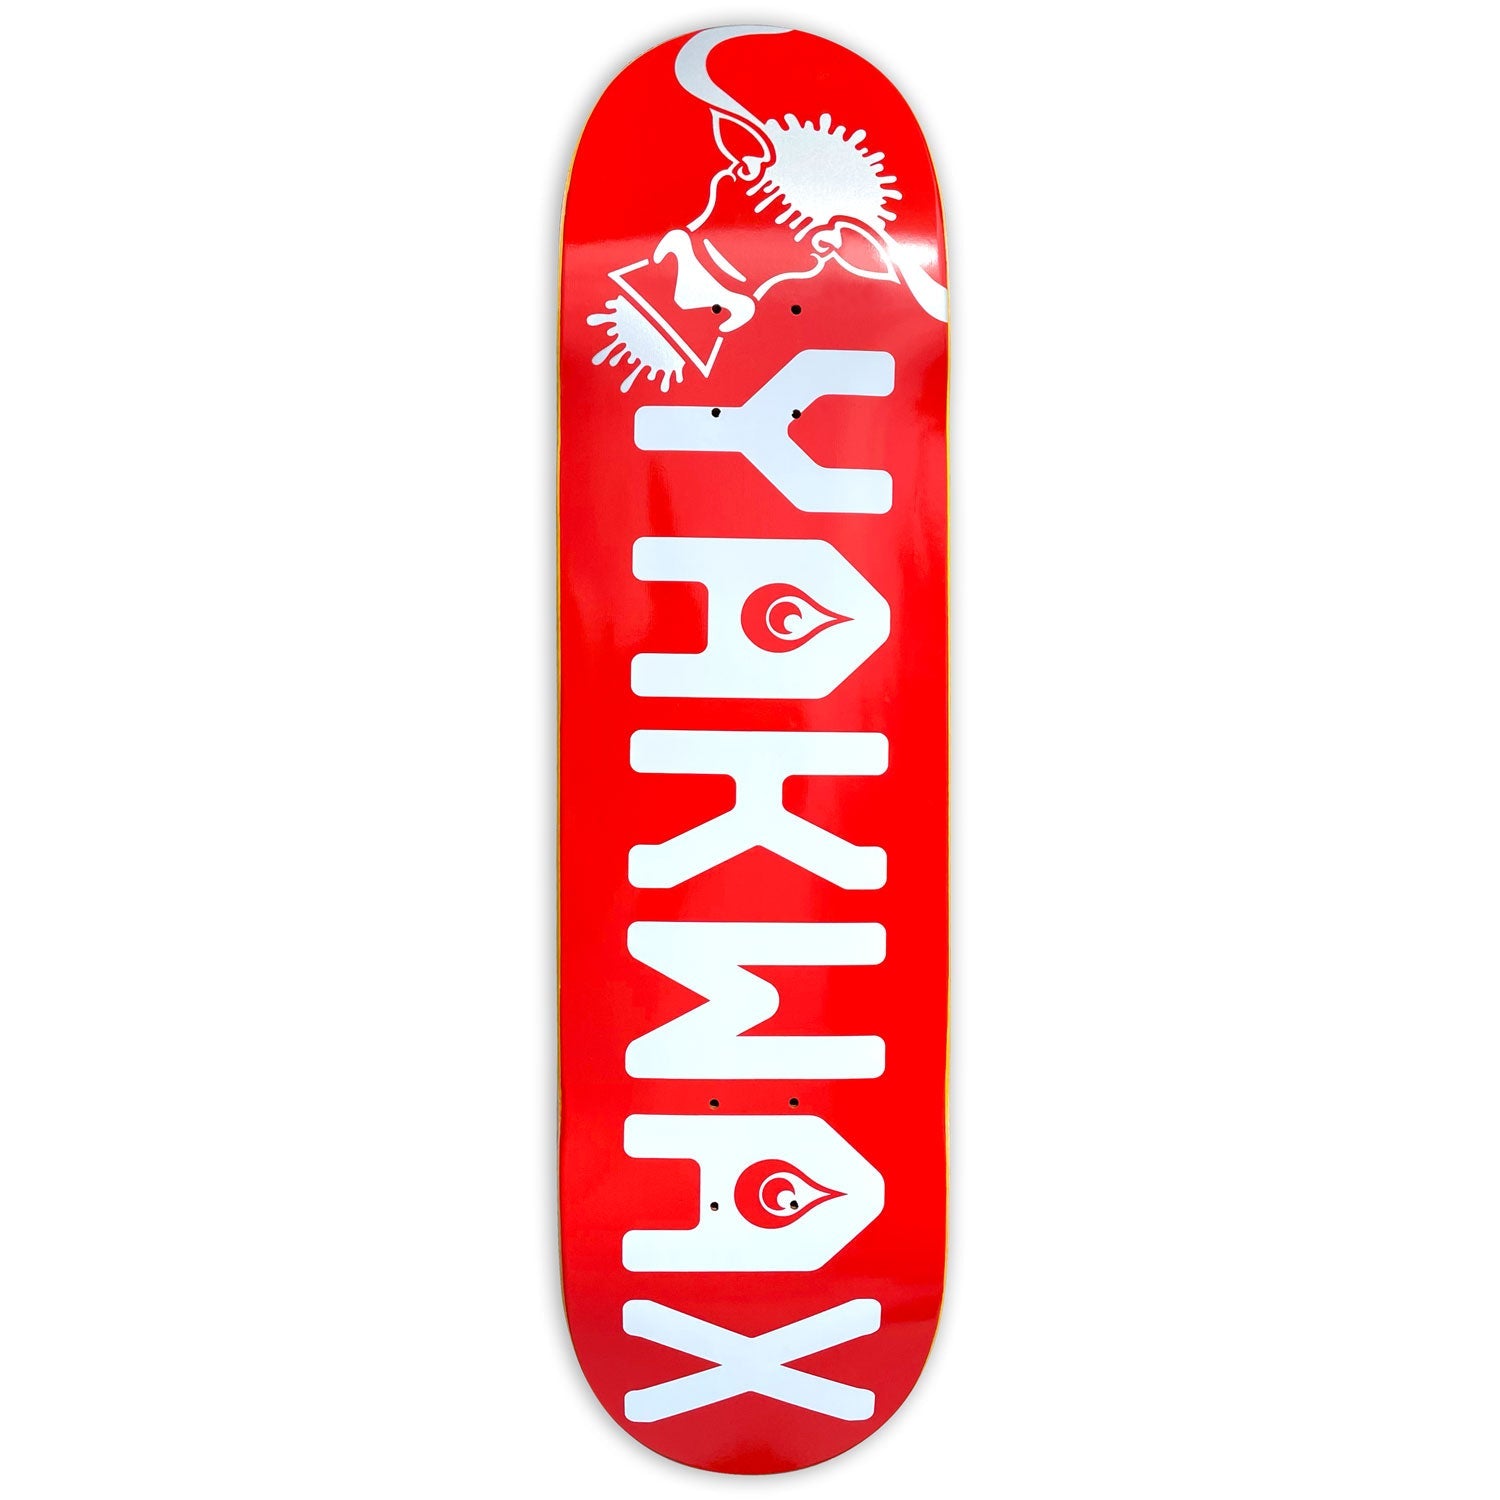 Yakwax OG Logo Code Red Skateboard Deck - Red/White/Silver - Skateboard Deck by Yakwax